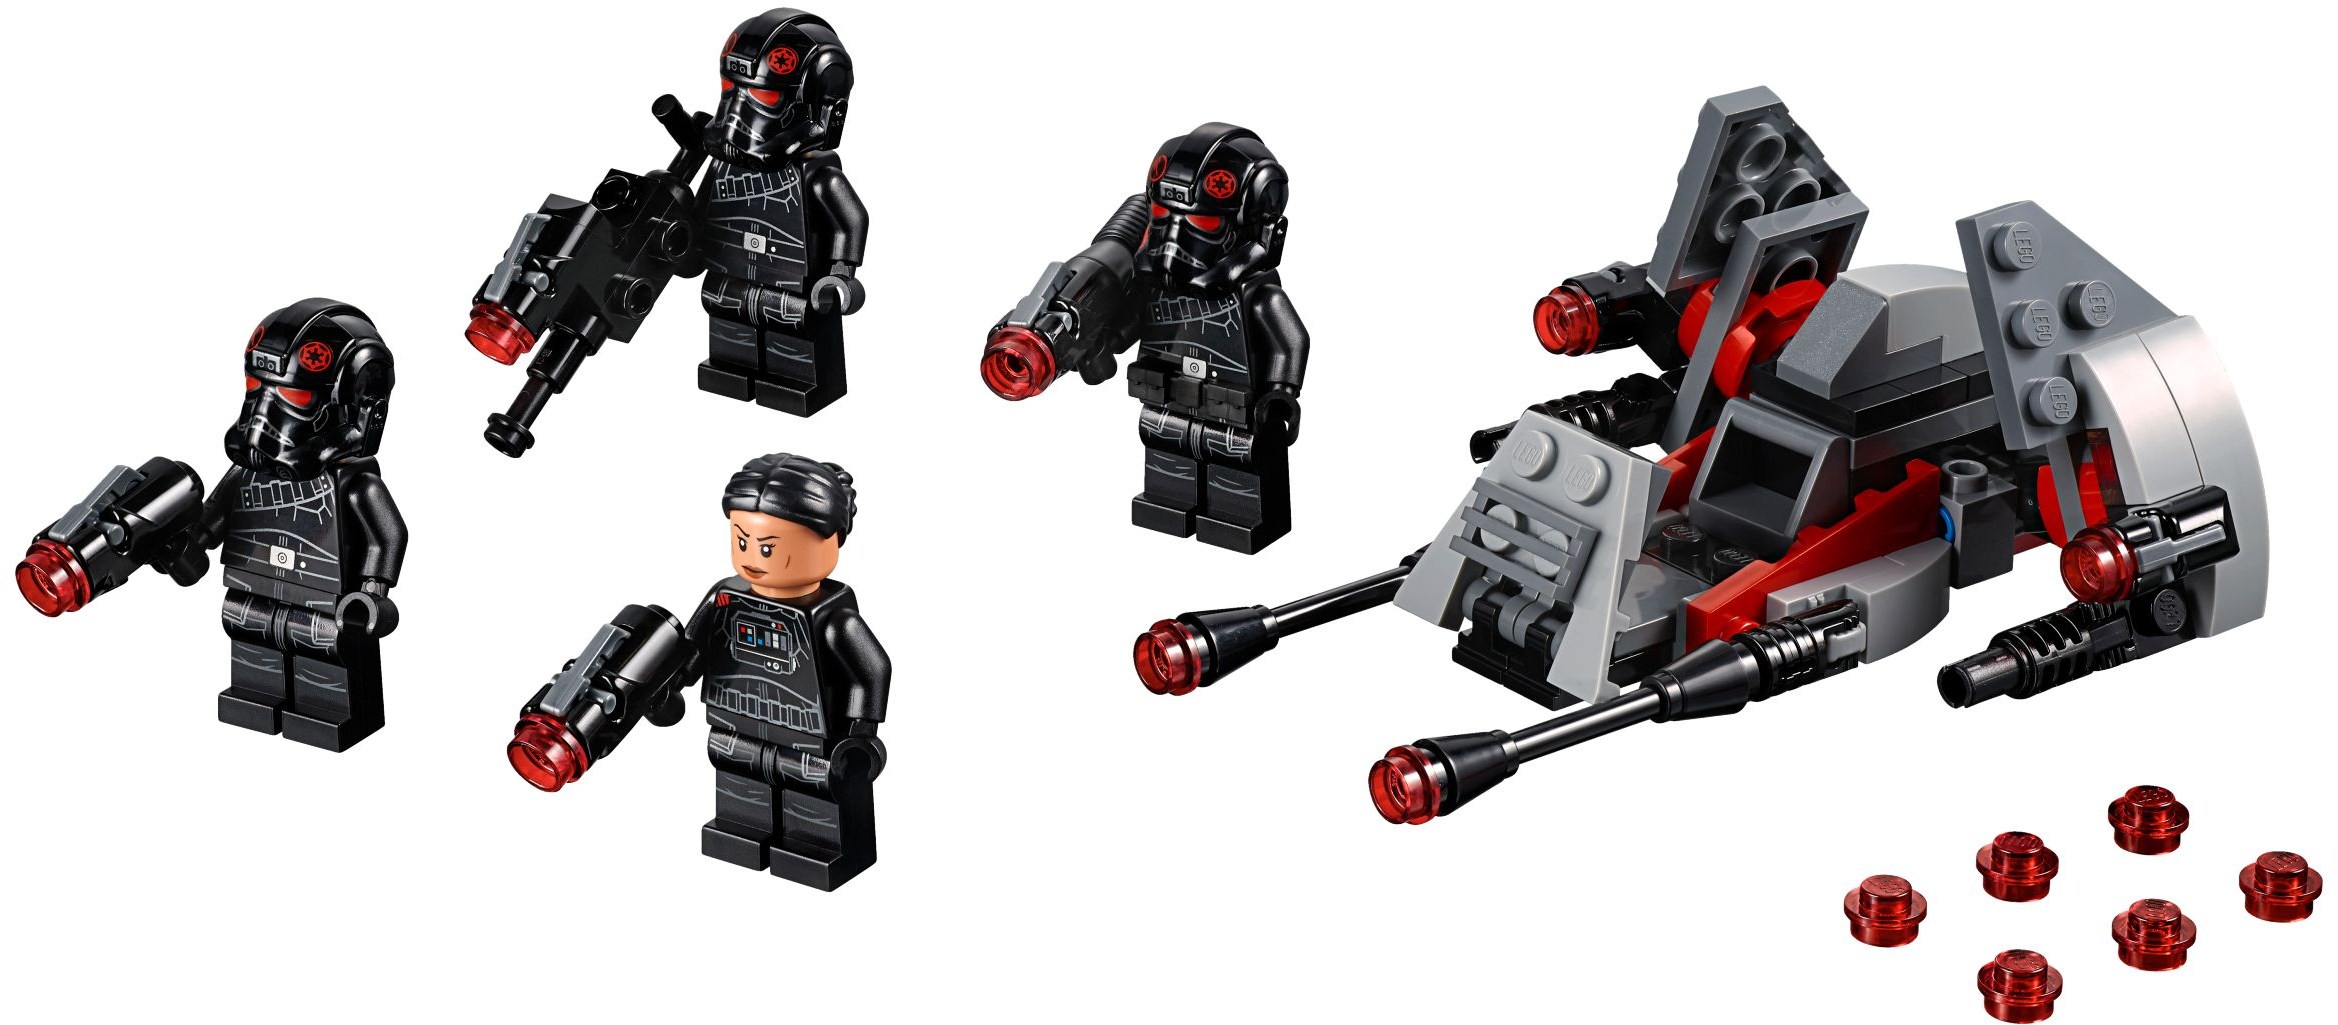 Star Wars | 2019 | Brickset: LEGO set 